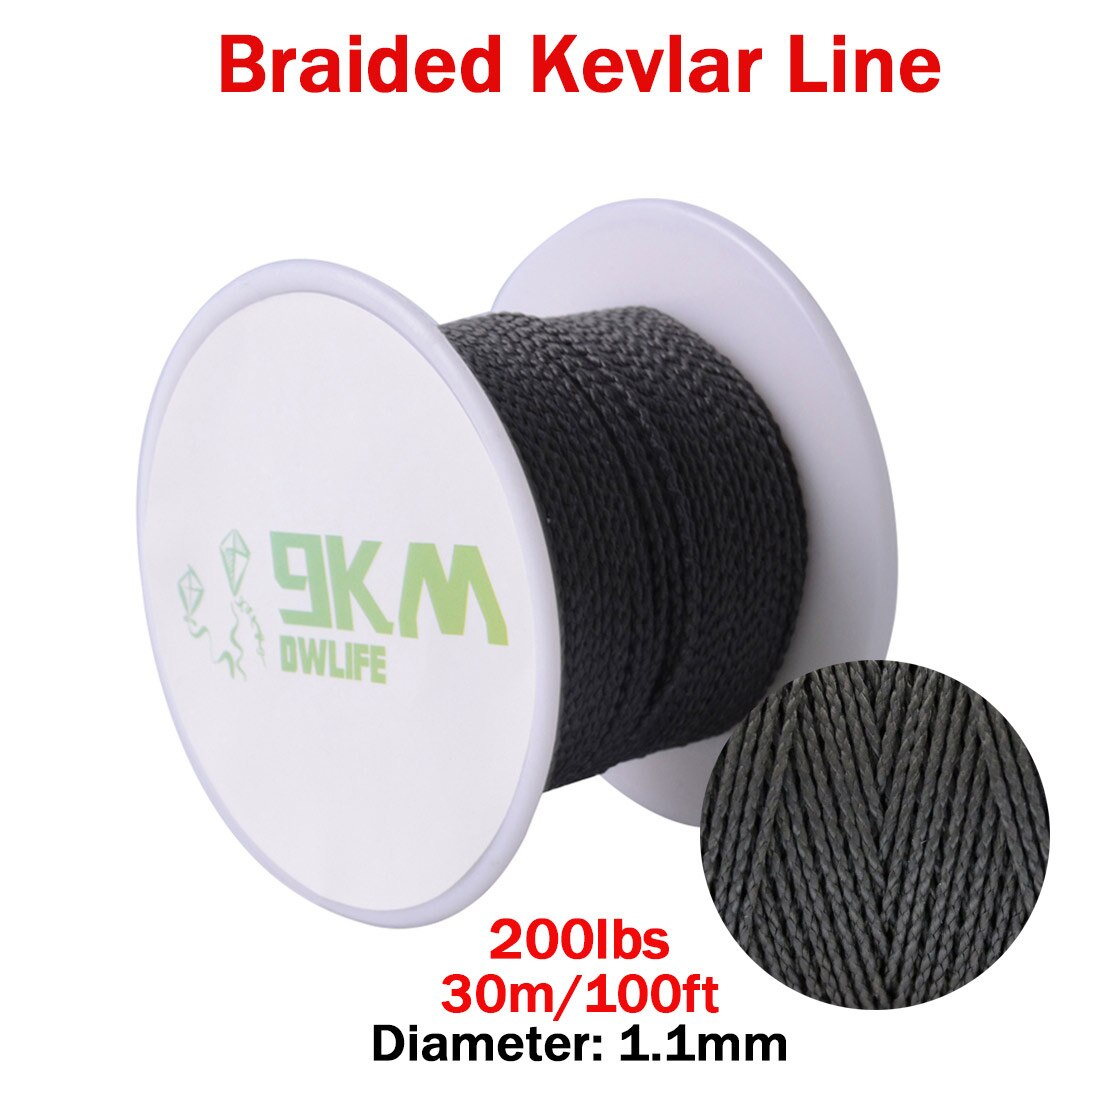 Braided Kevlar Line 100ft 200lb made with Kevlar Kite String Camping Fishing